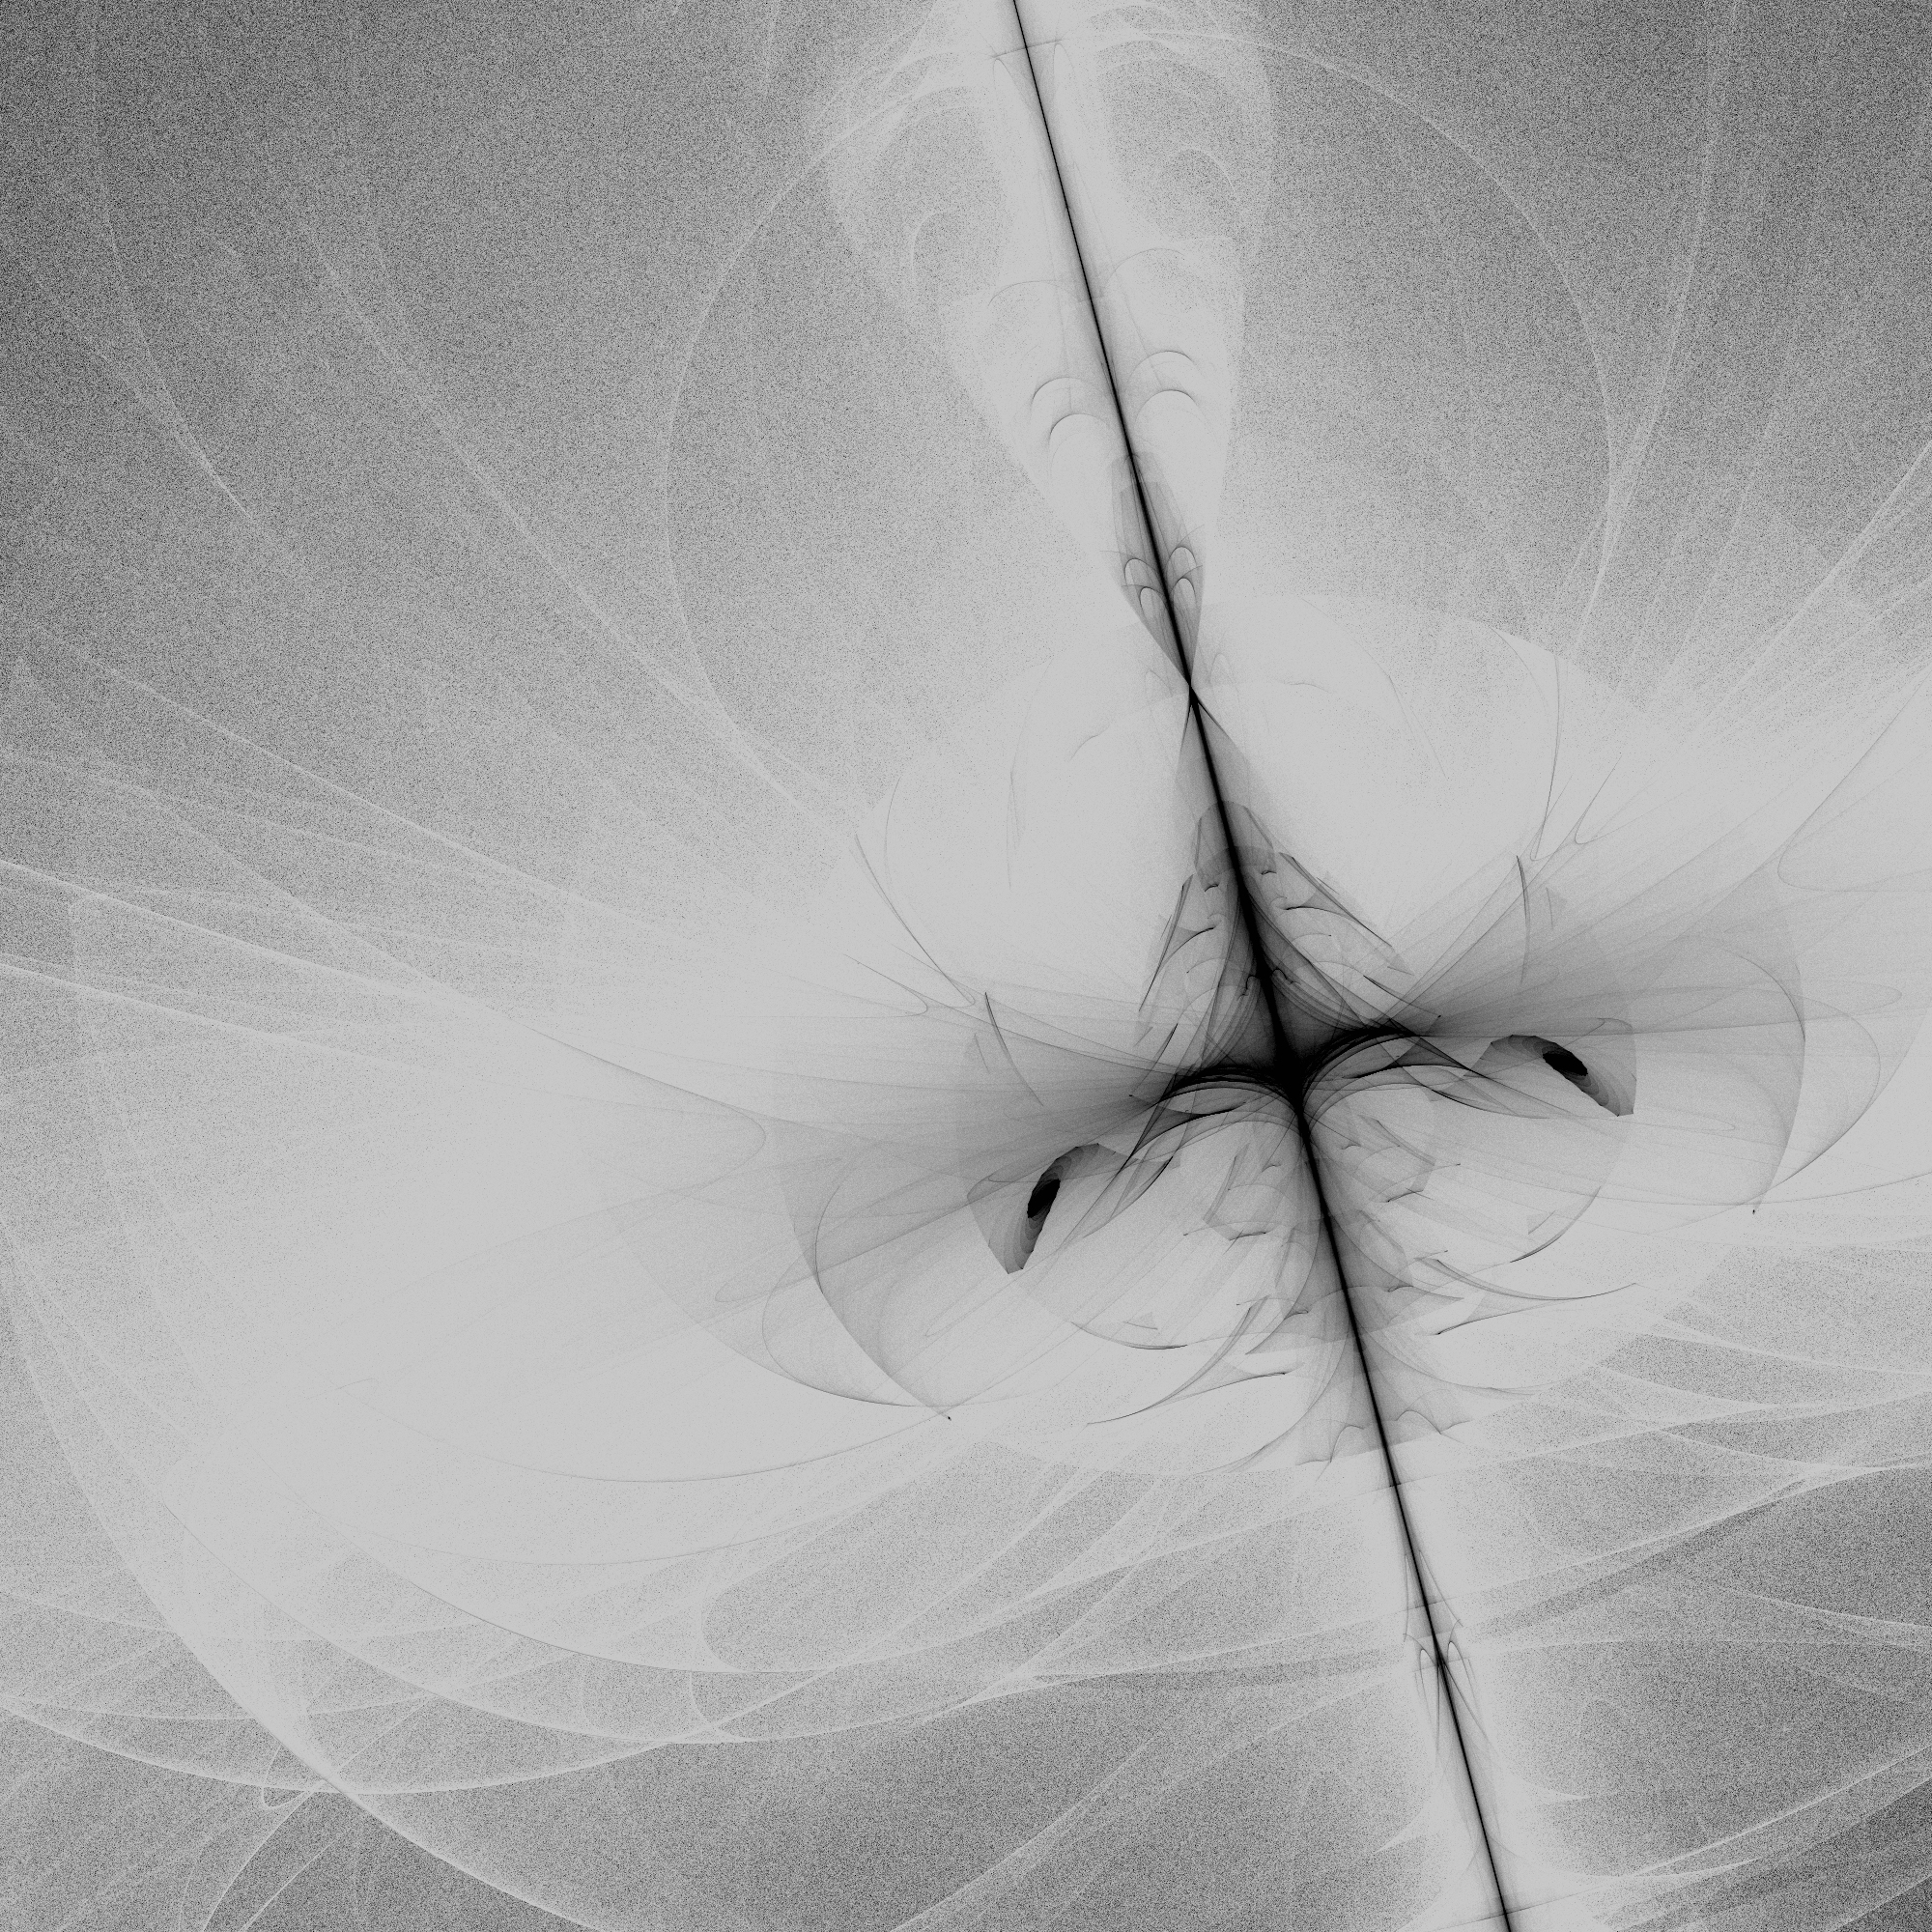 Abstract fractal art photo